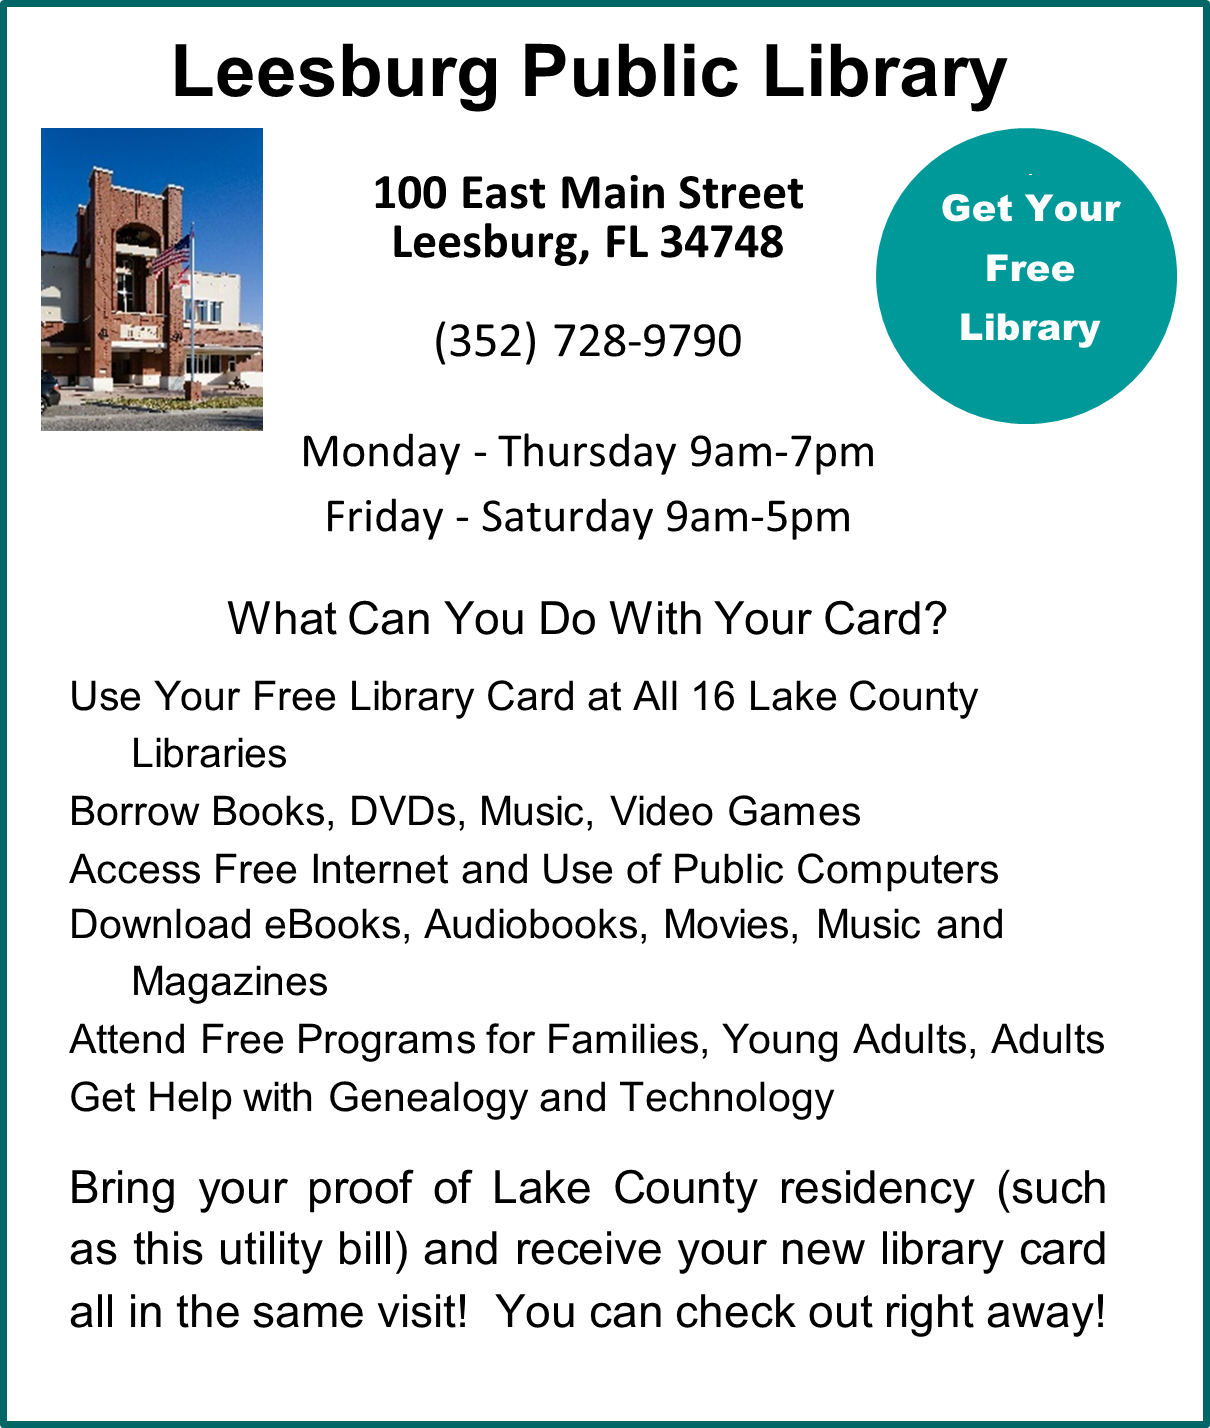 Leesburg Public Library location information clip art